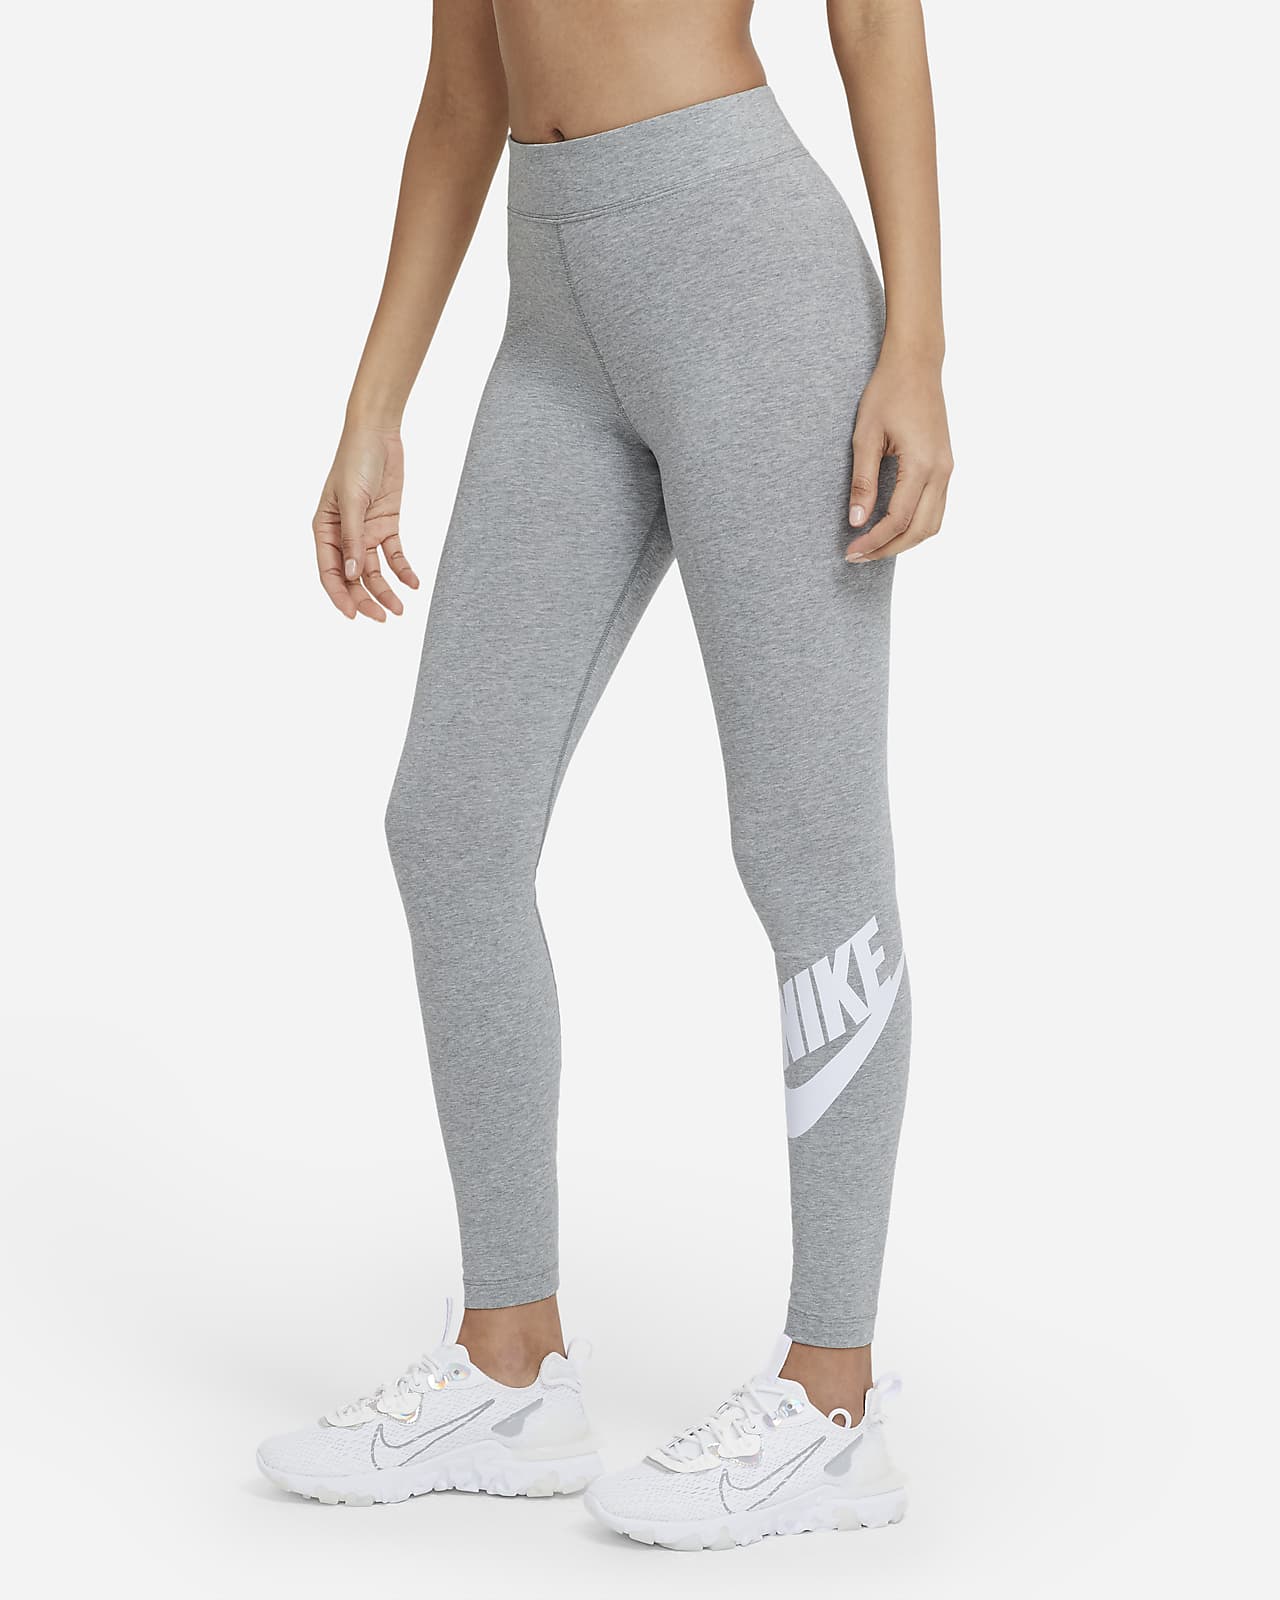 Legginsy damskie Sporstwear Leg-A-See Short Nike - jasny szary